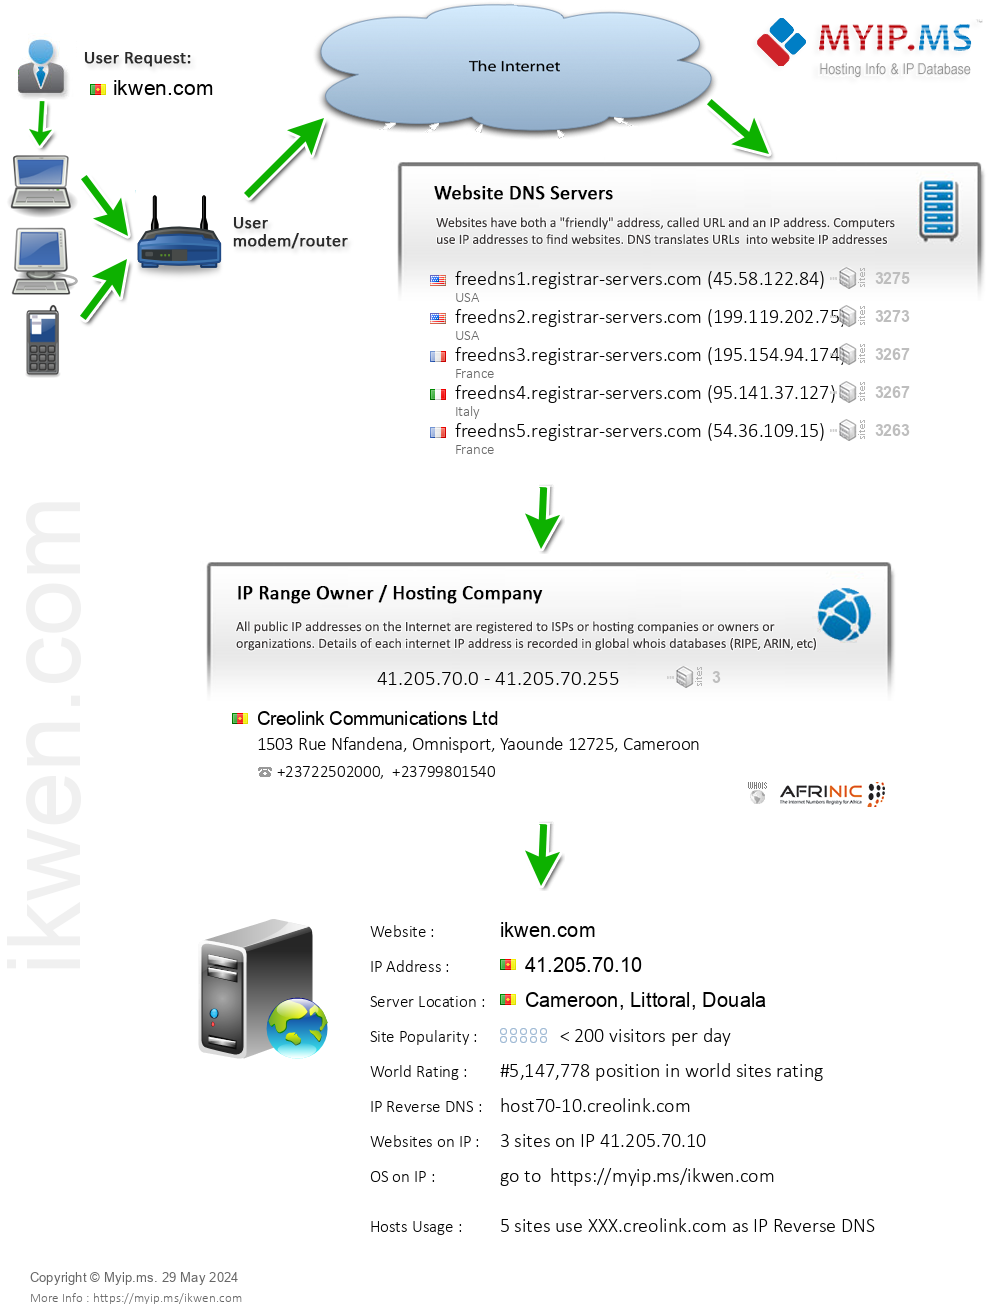 Ikwen.com - Website Hosting Visual IP Diagram